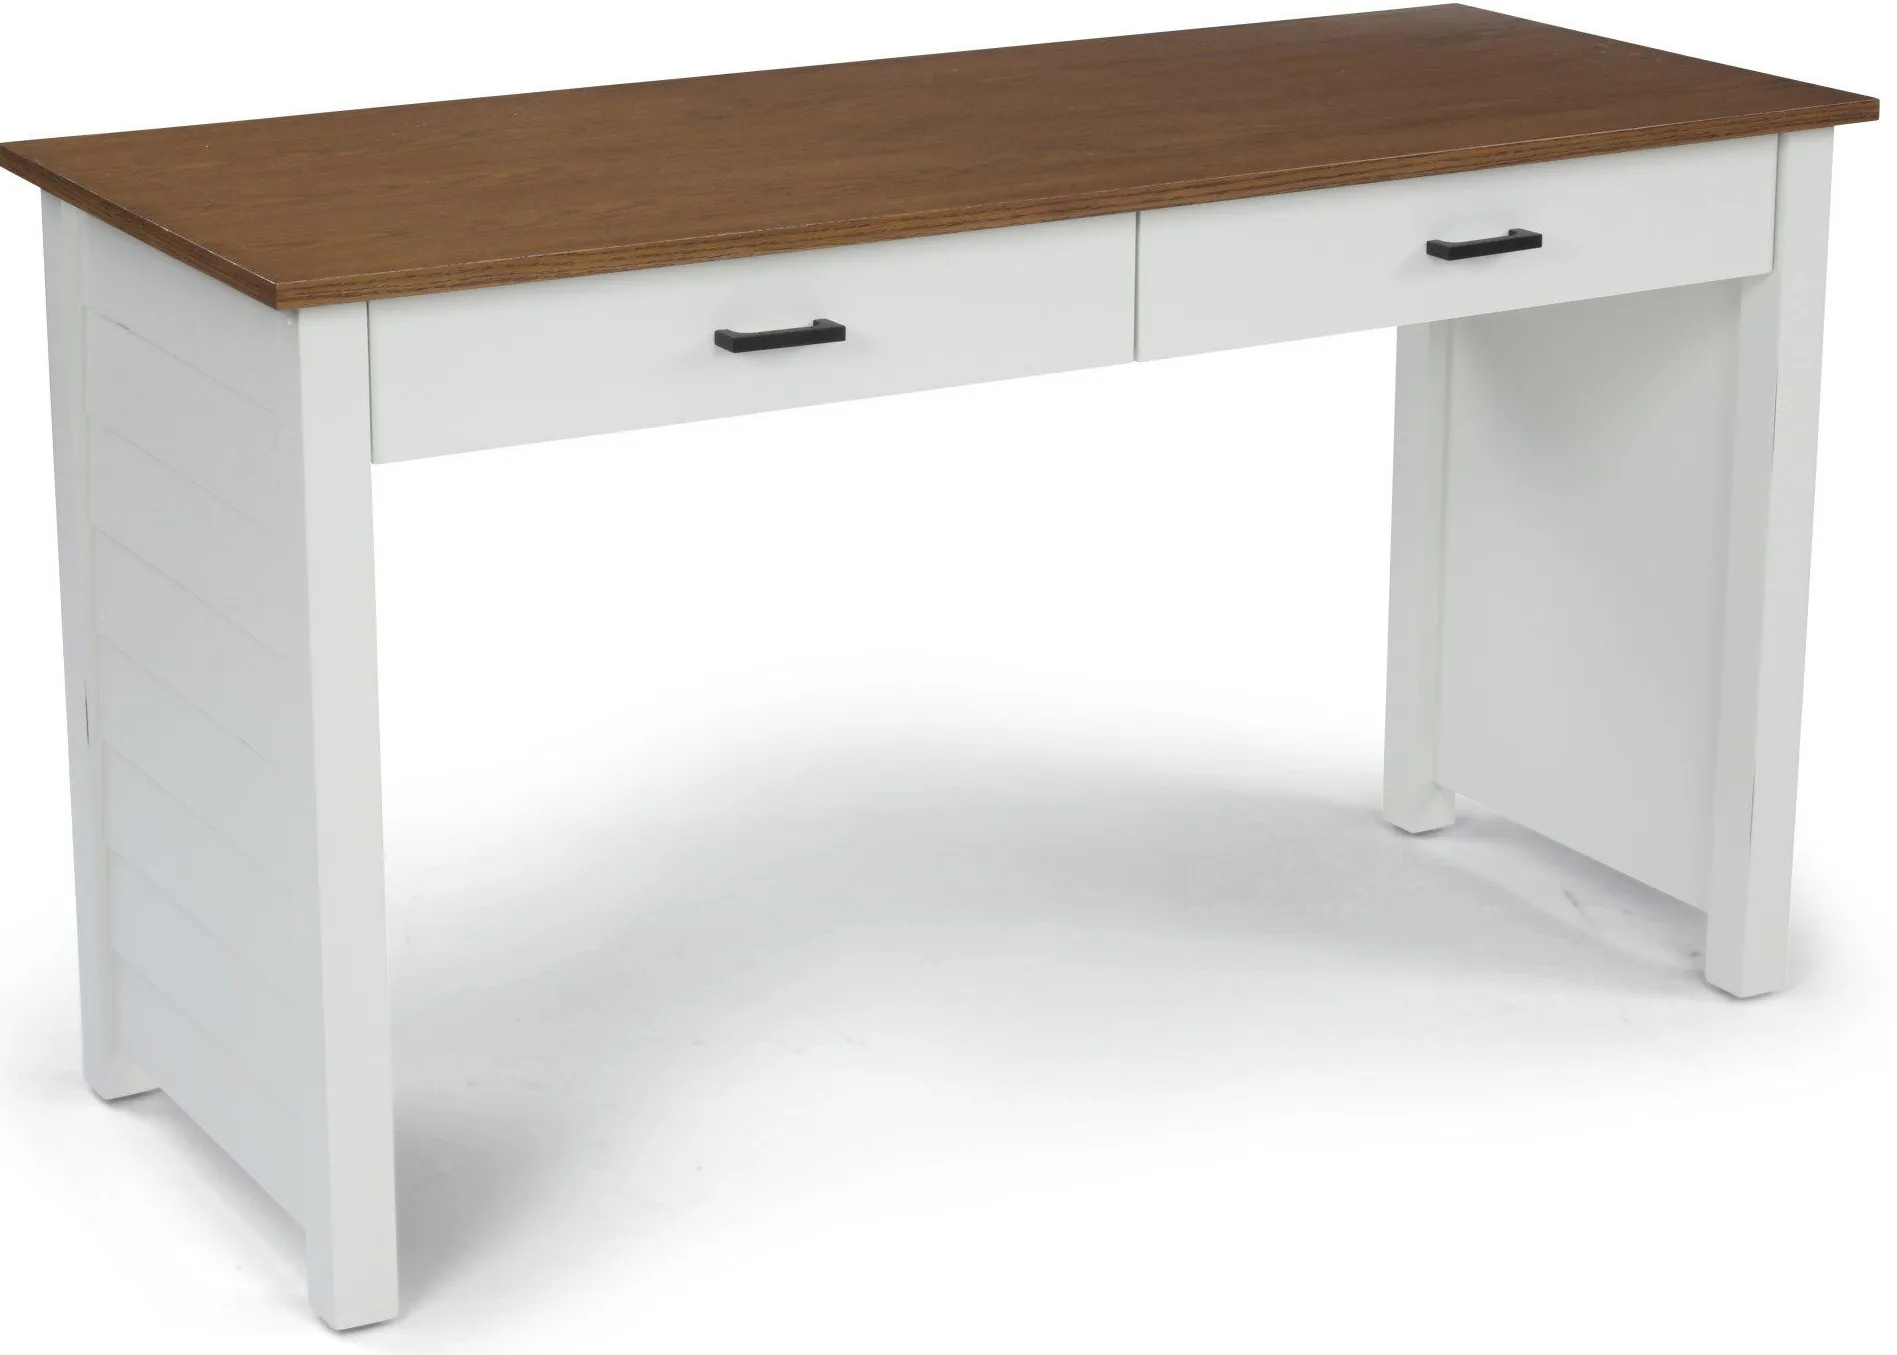 homestyles® Portsmouth Off-White Desk